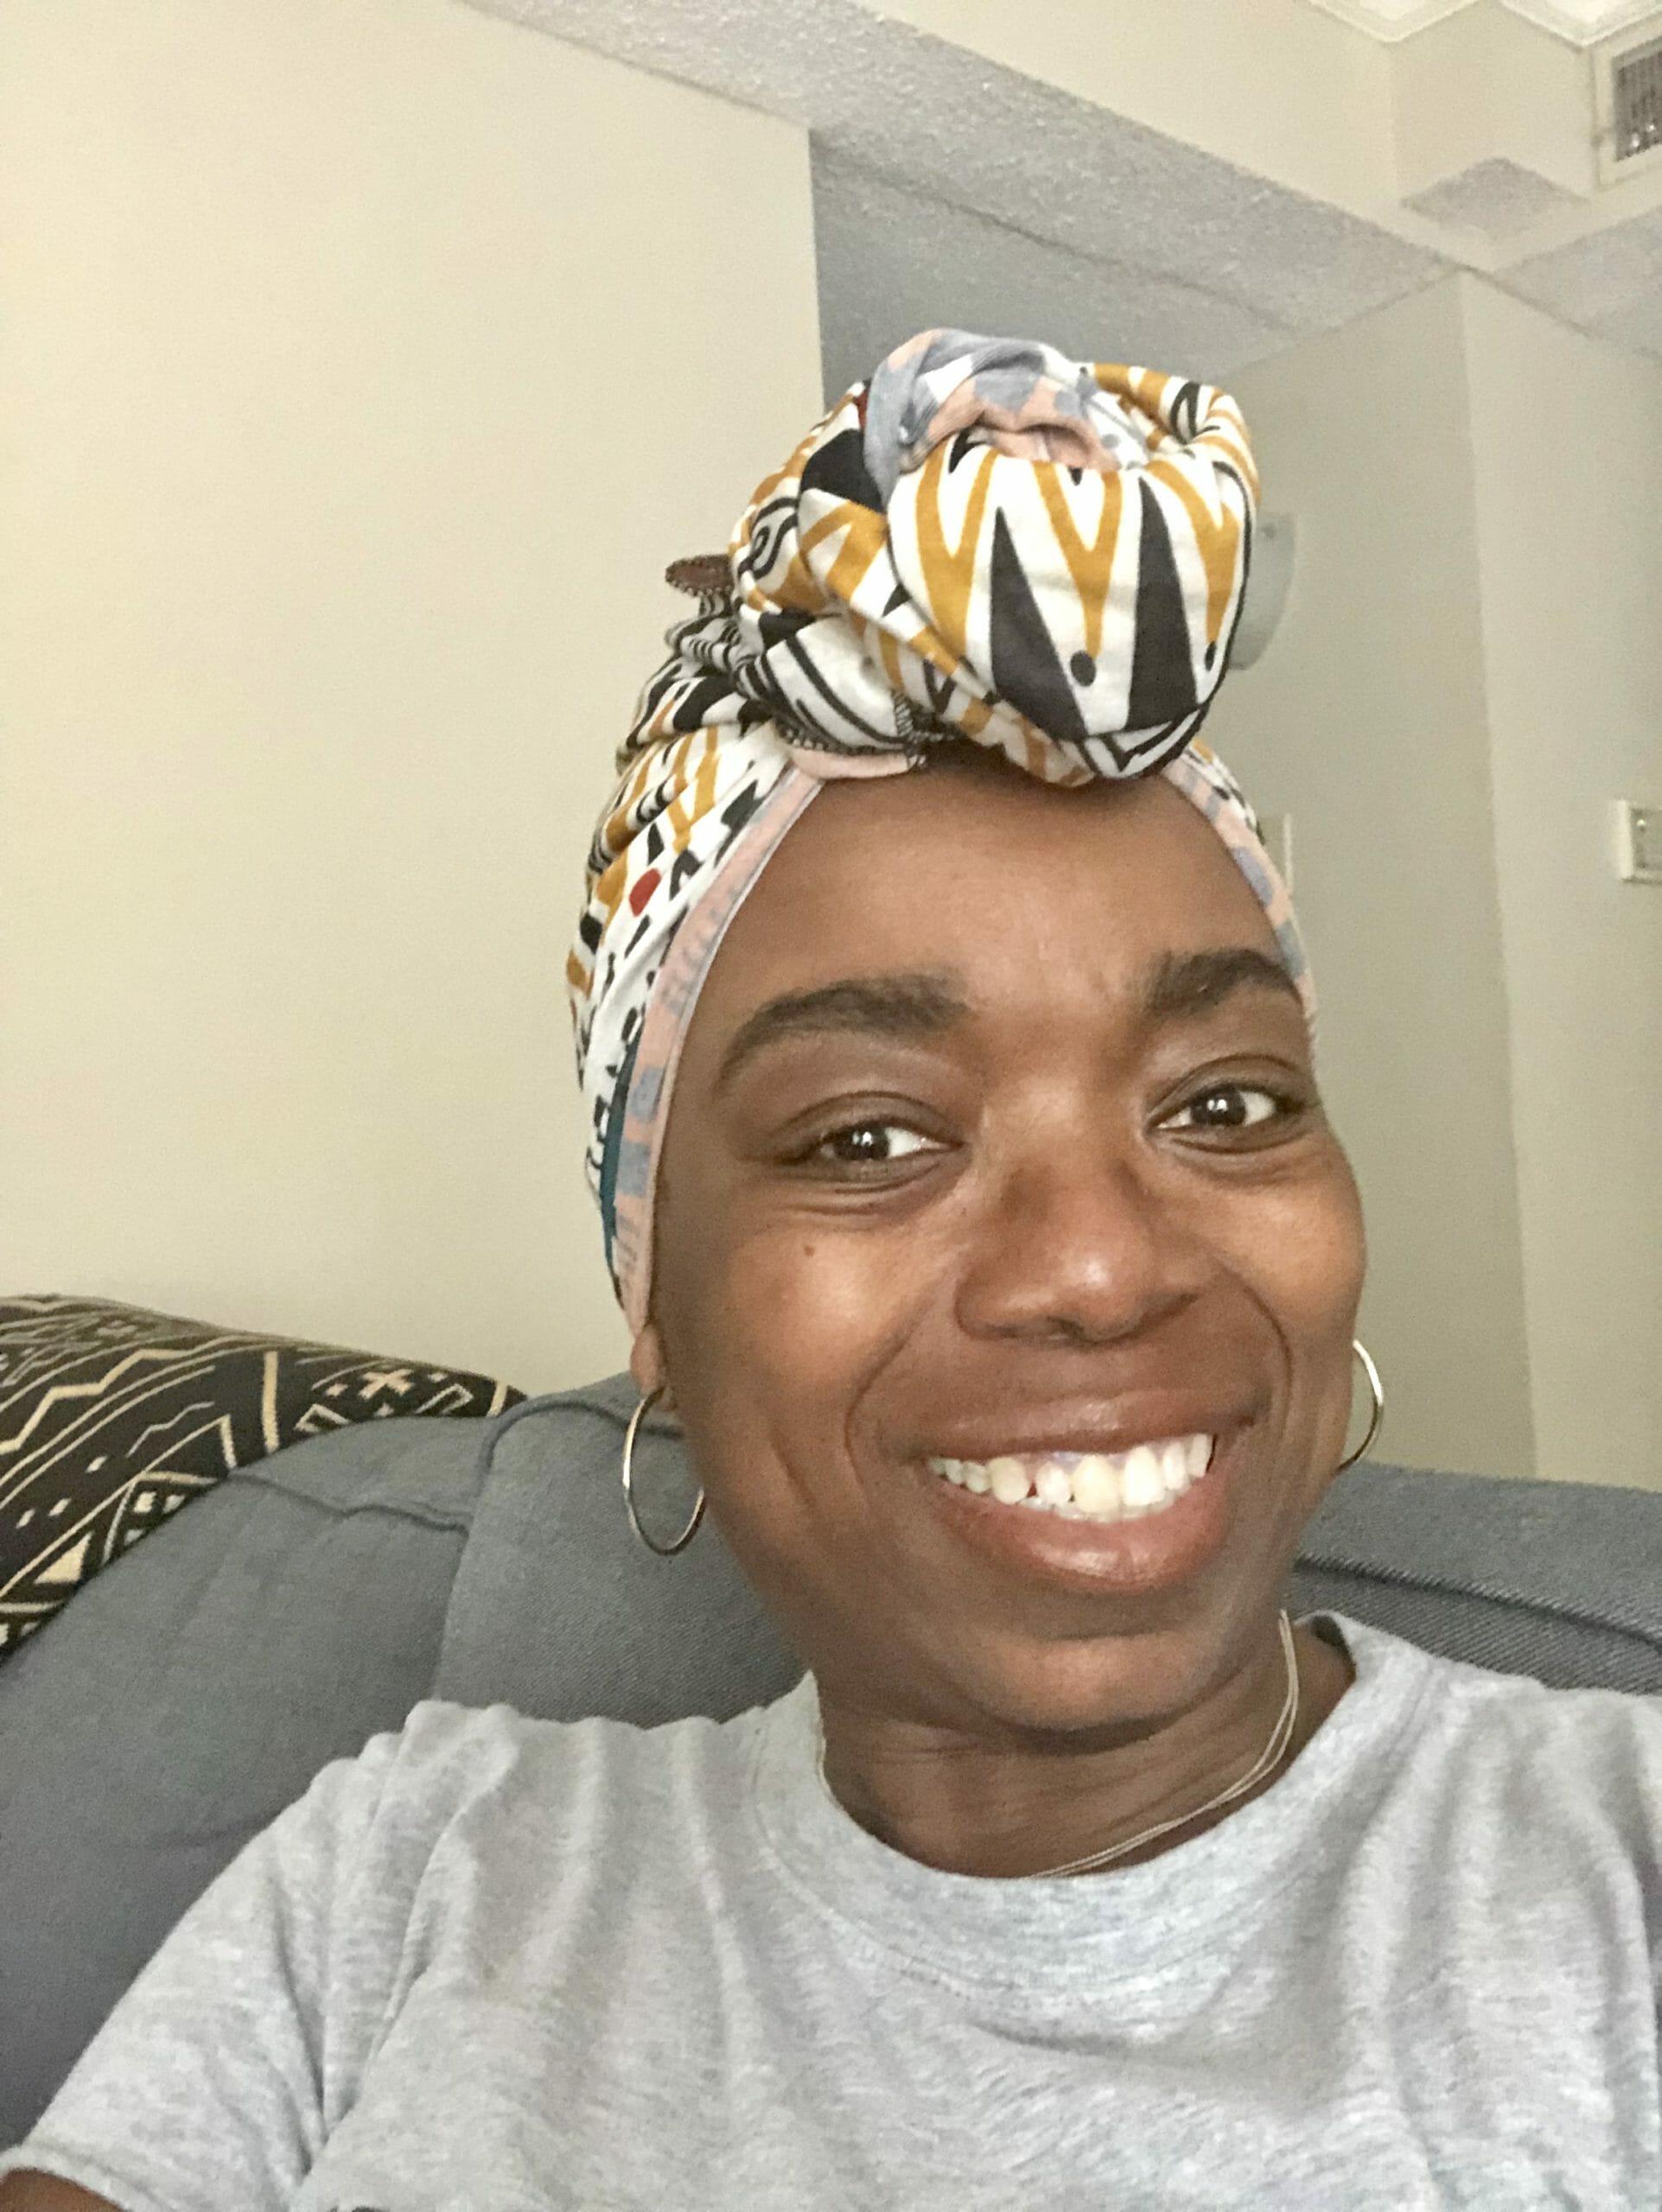 Image of Monique K. in headwrap